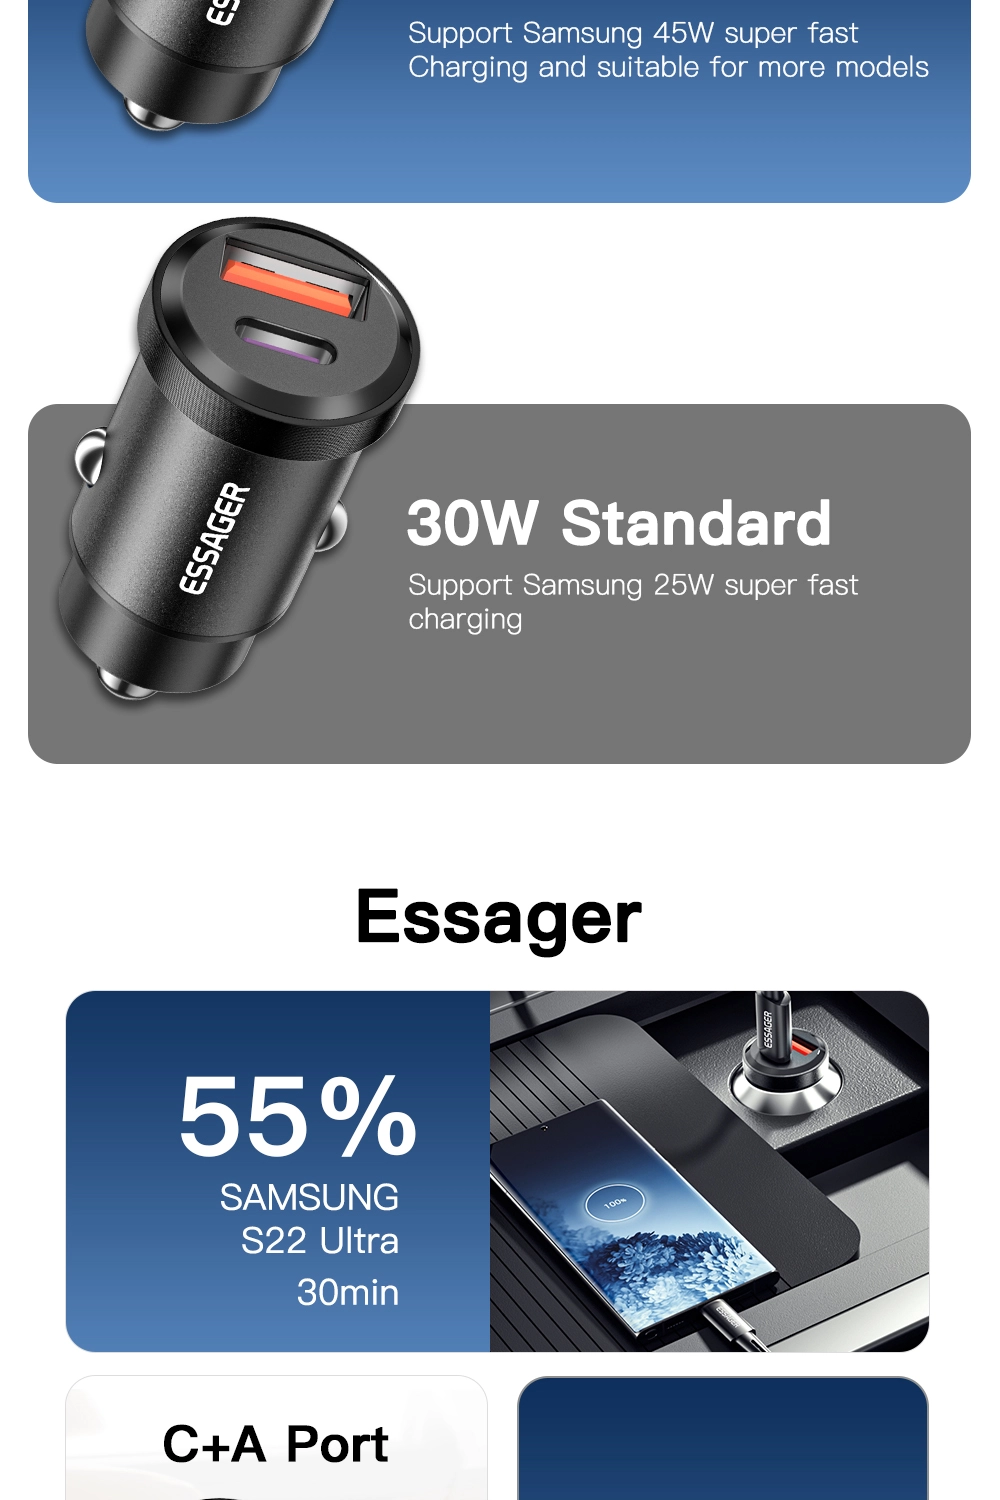 ESSAGER ES-CC07 Series 30W 45W USB A USB C Best Car Phone Charger